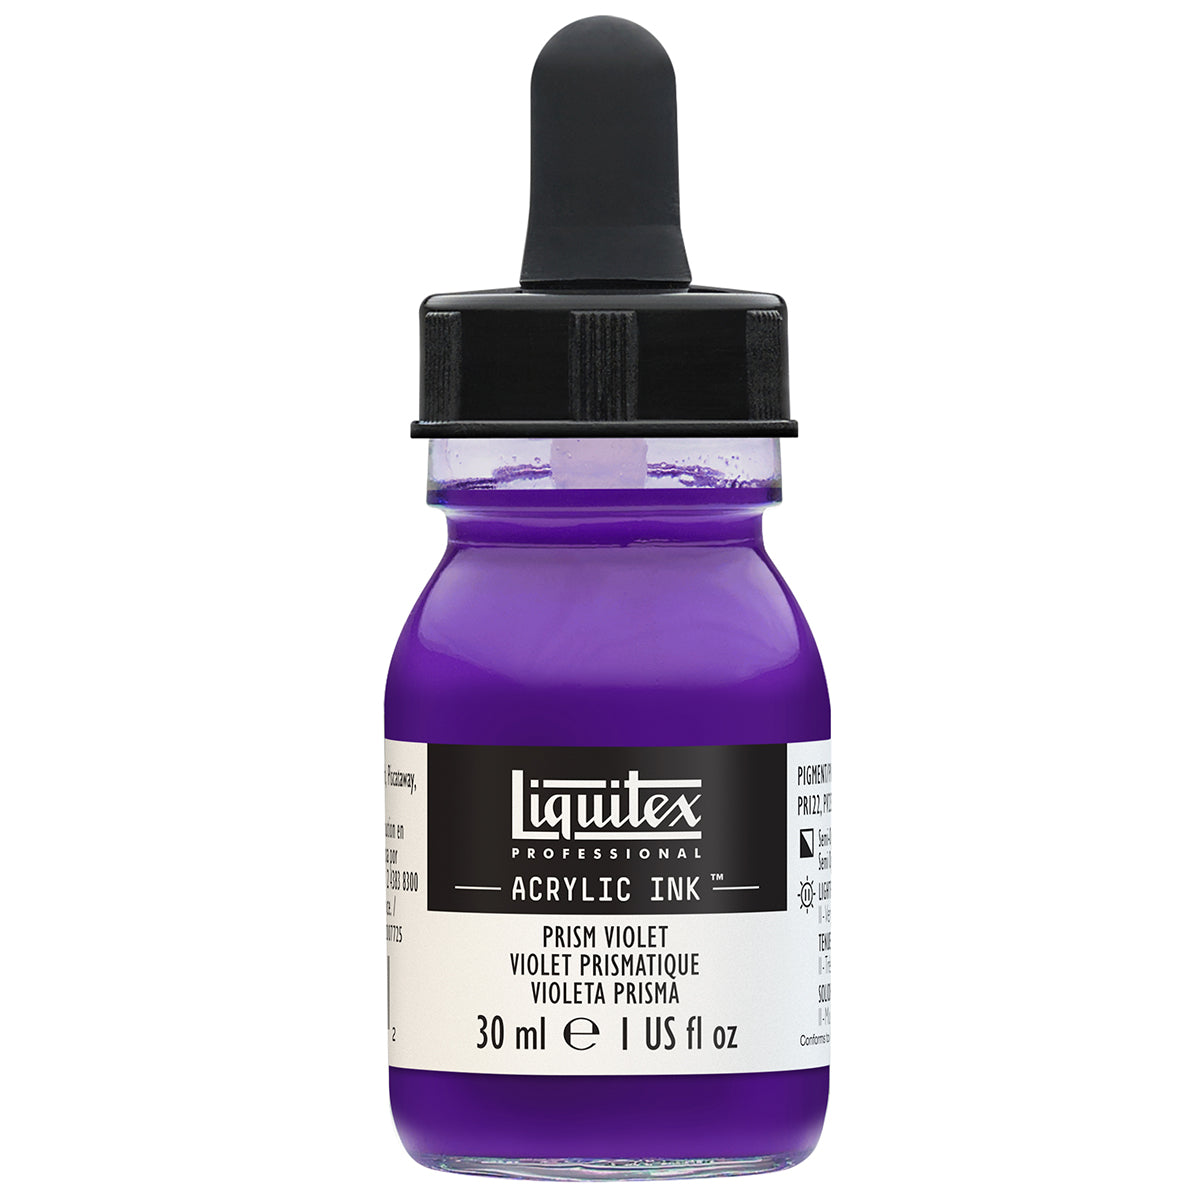 Liquitex - Acrylic Ink - 30ml Purple